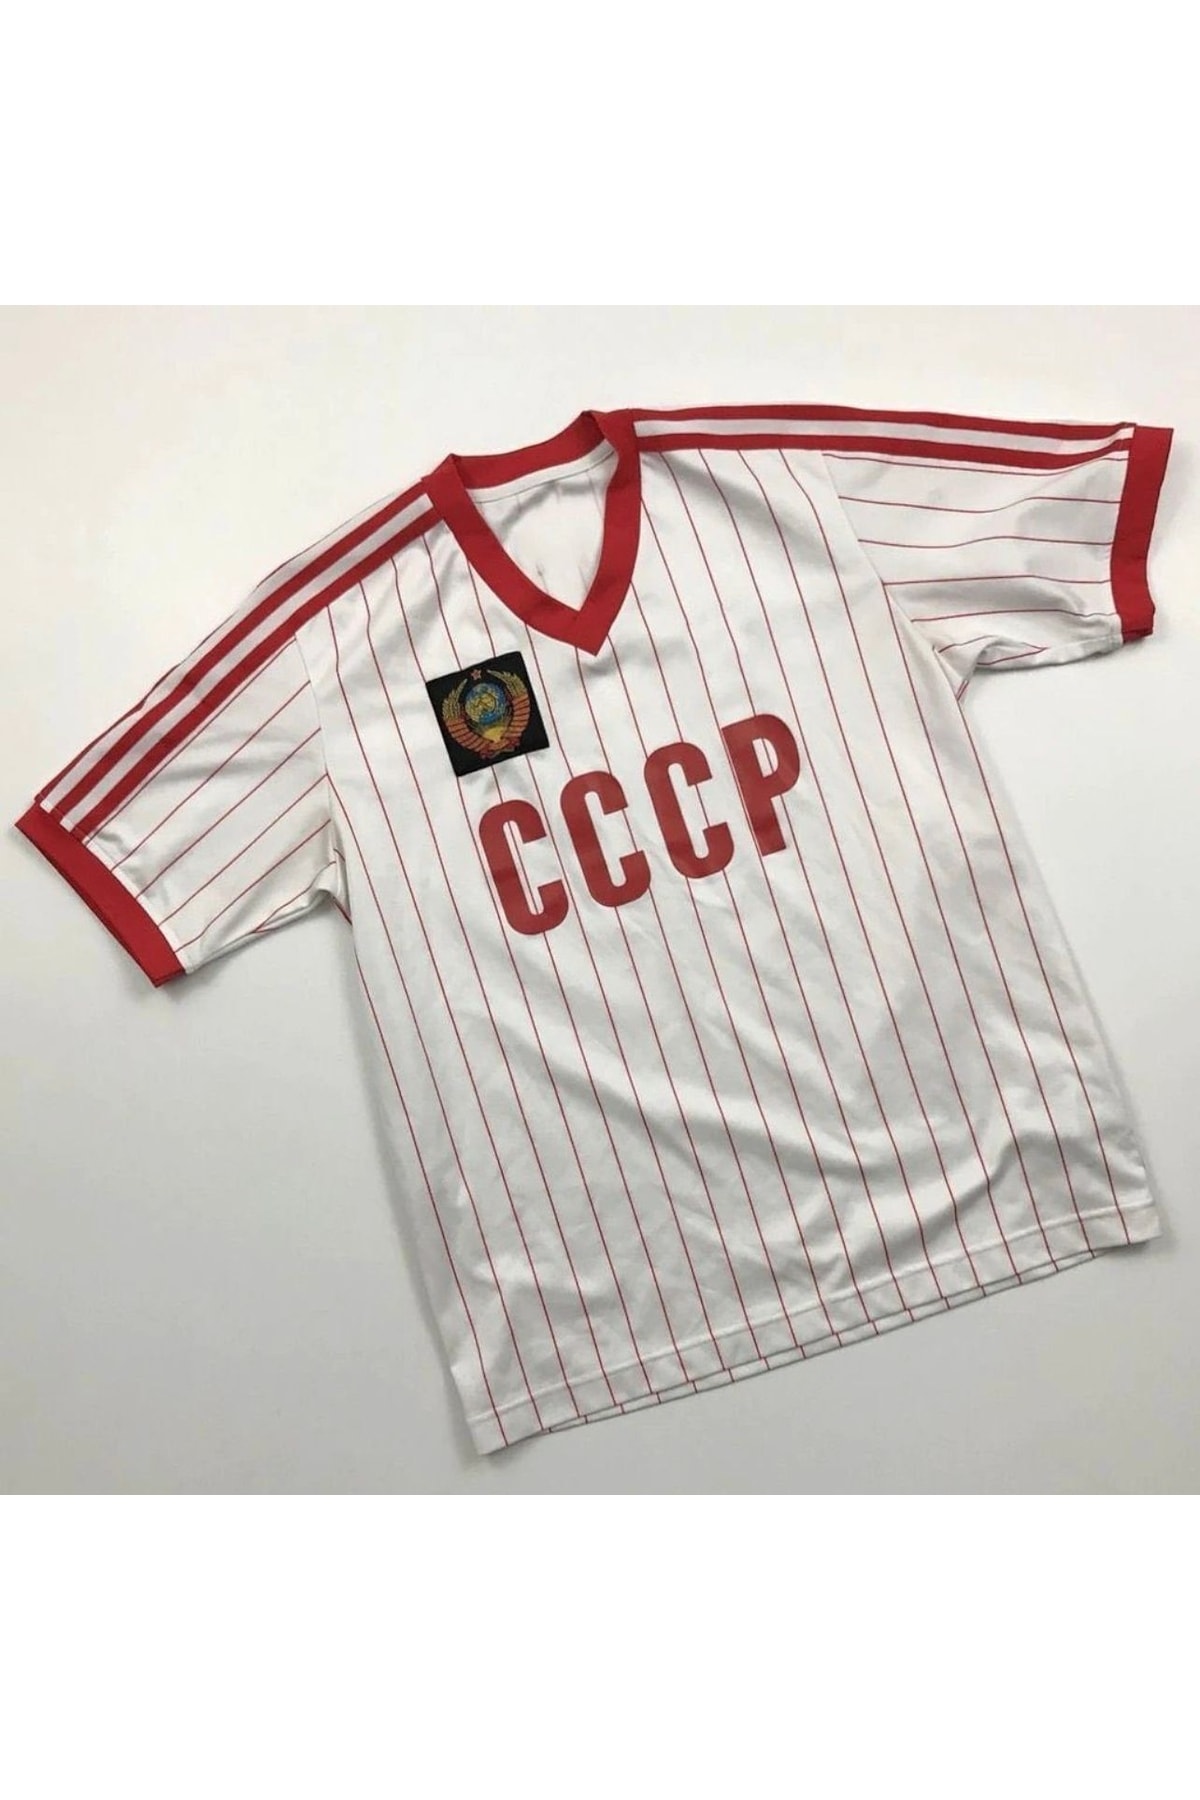 Pasxaspor Nostalji Cccp Sovyet Forma Modeli